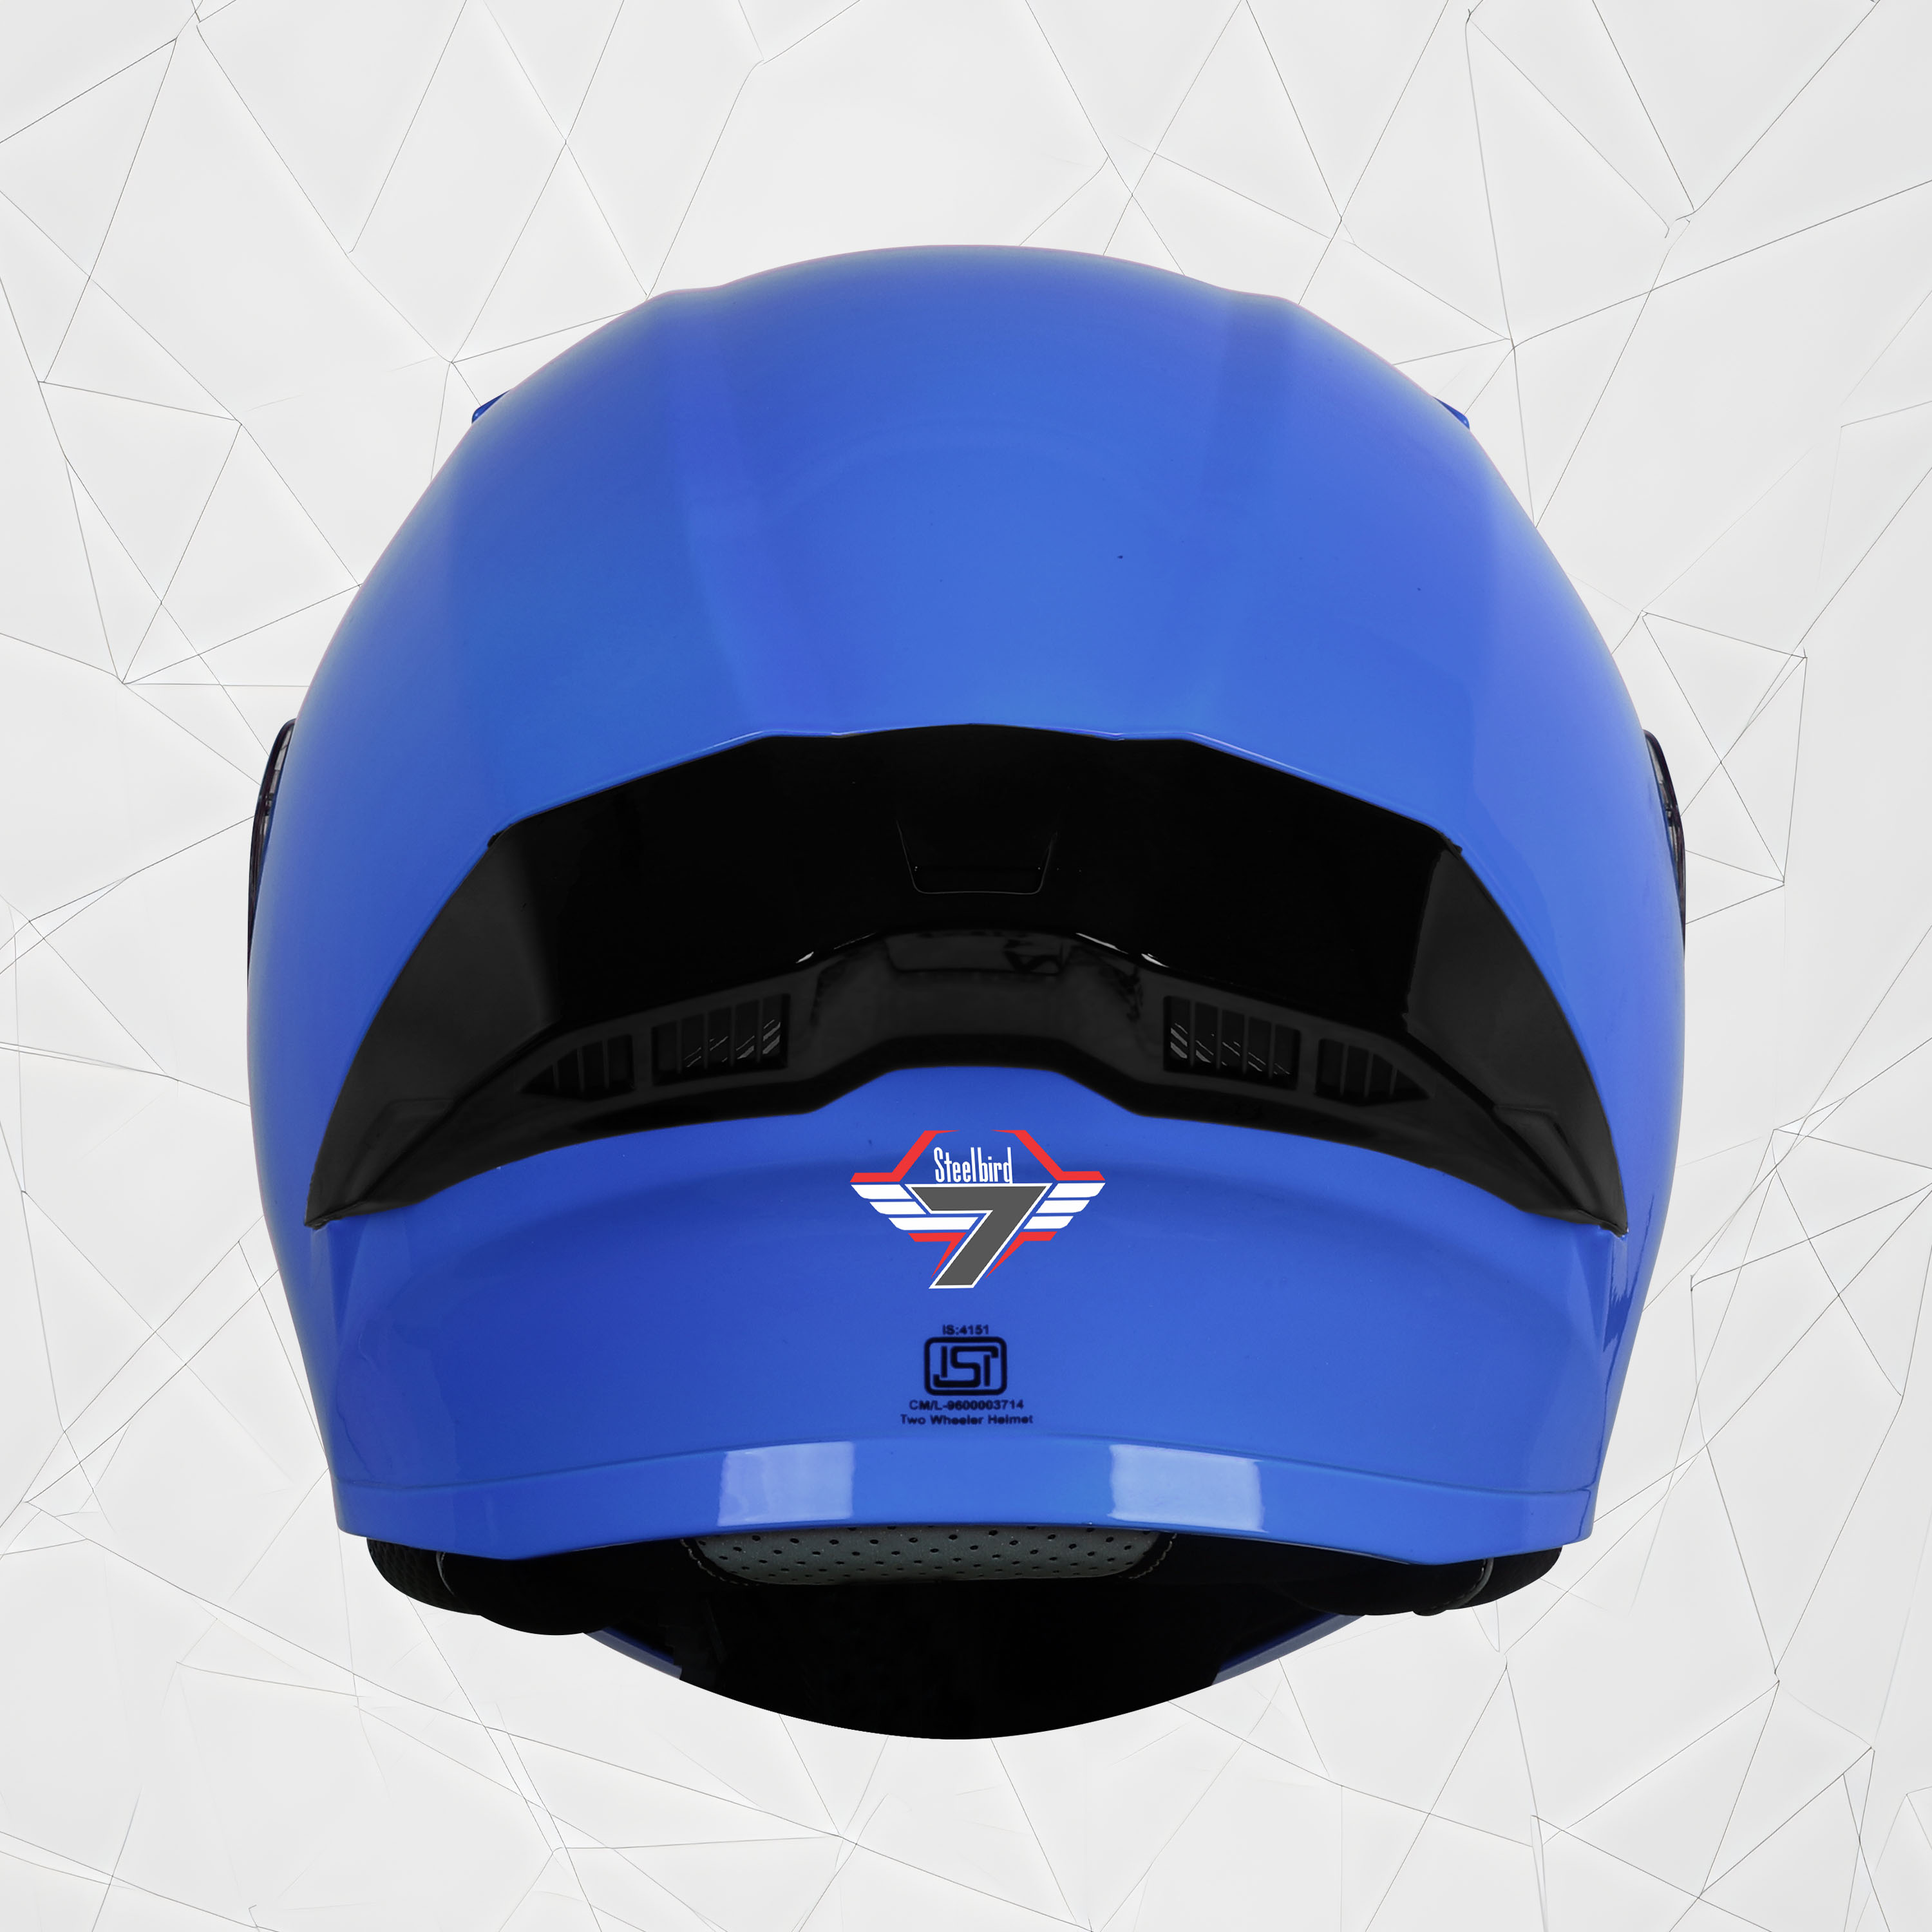 Steelbird SBA-20 7Wings ISI Certified Flip-Up Helmet With Black Spoiler For Men And Women (Matt Y. Blue With Clear Visor)